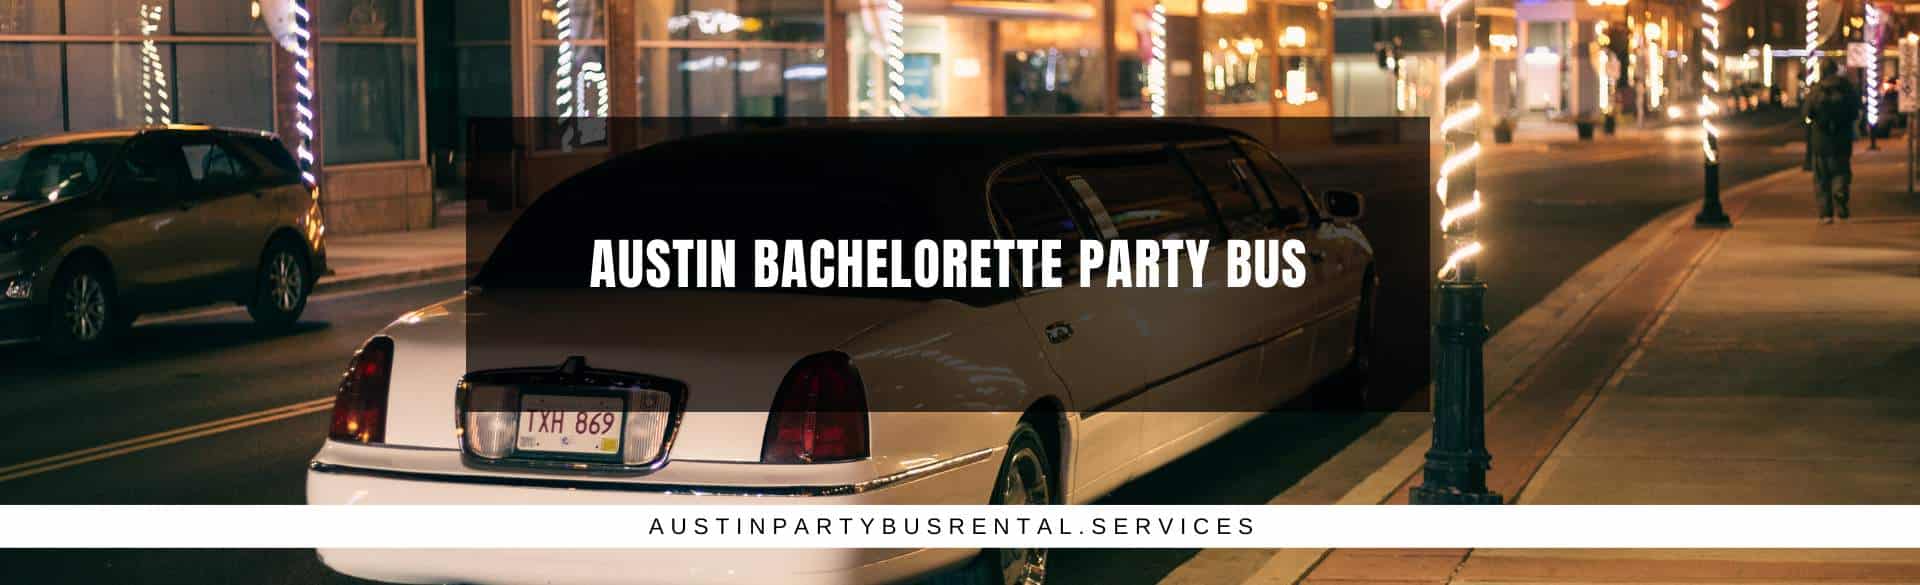 Austin Bachelorette Party Bus